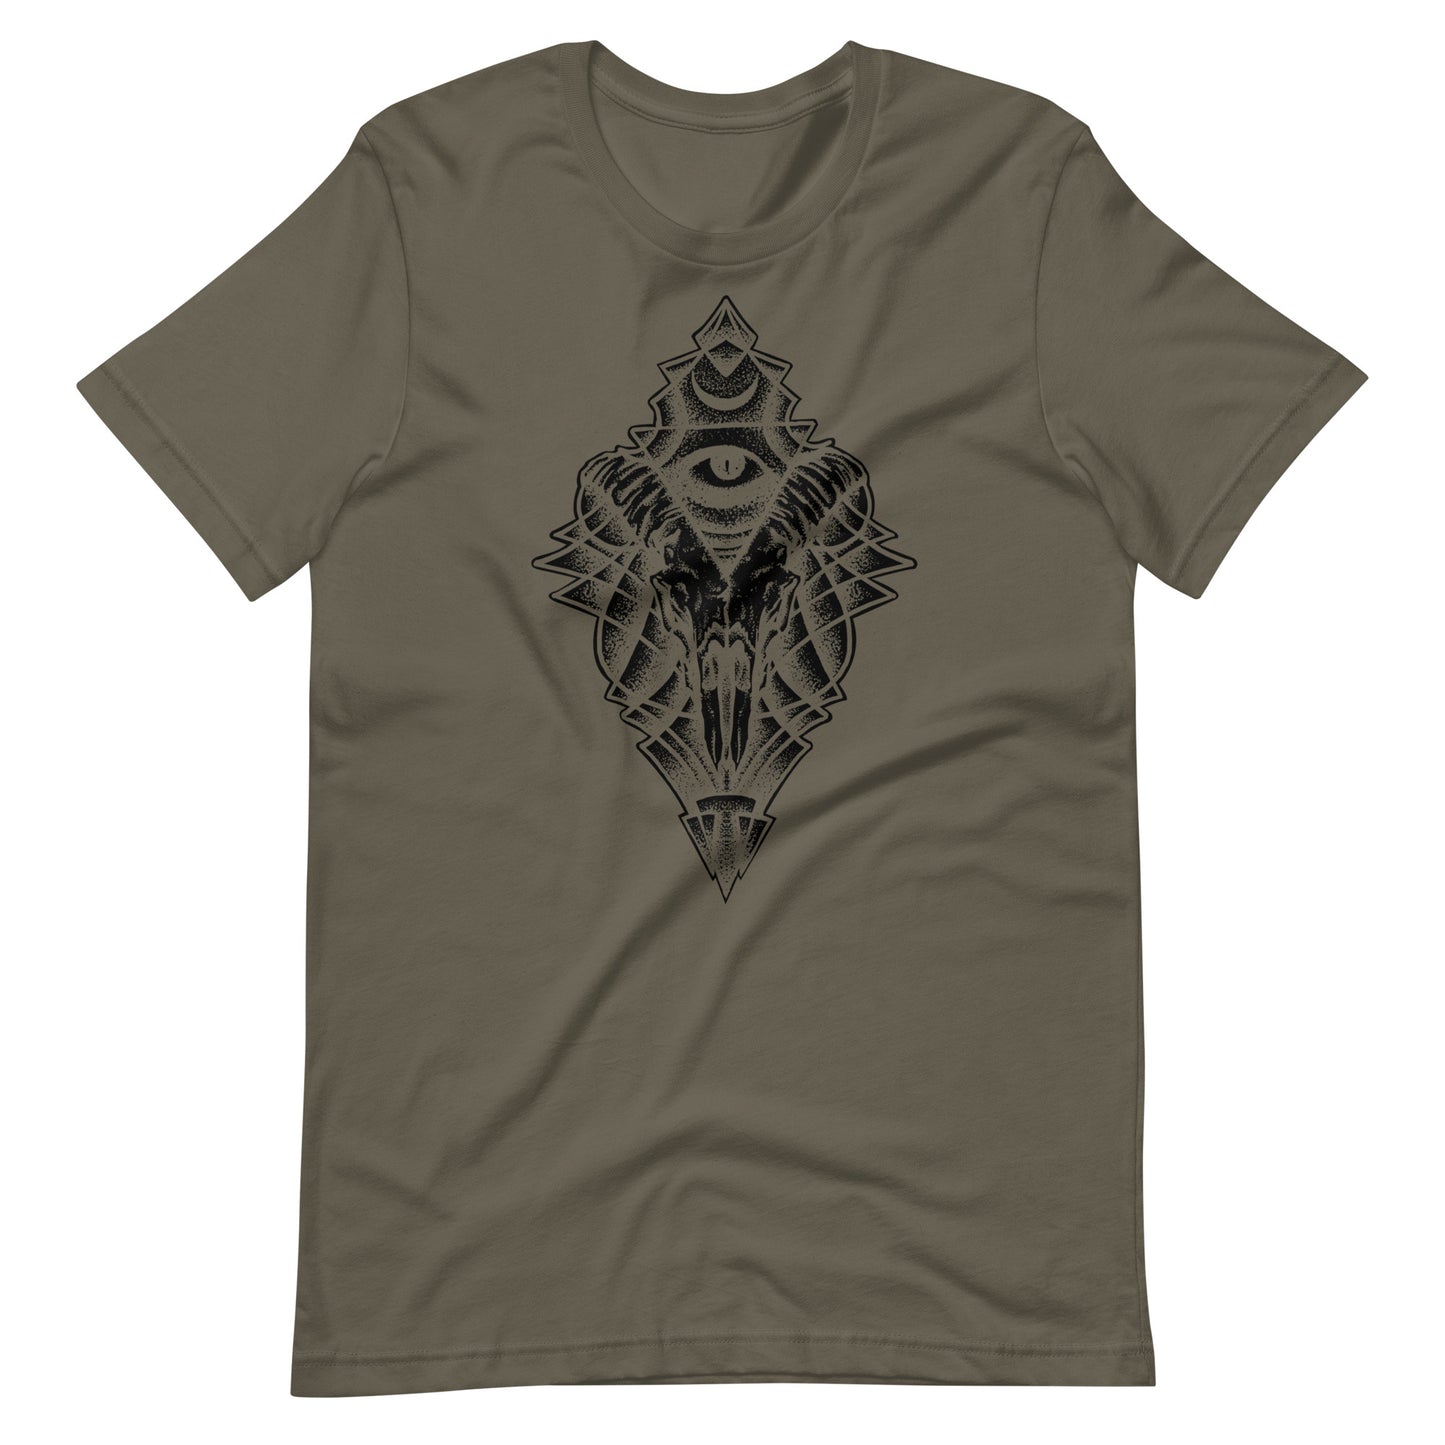 Energy Eye Black - Men's t-shirt - Army Front